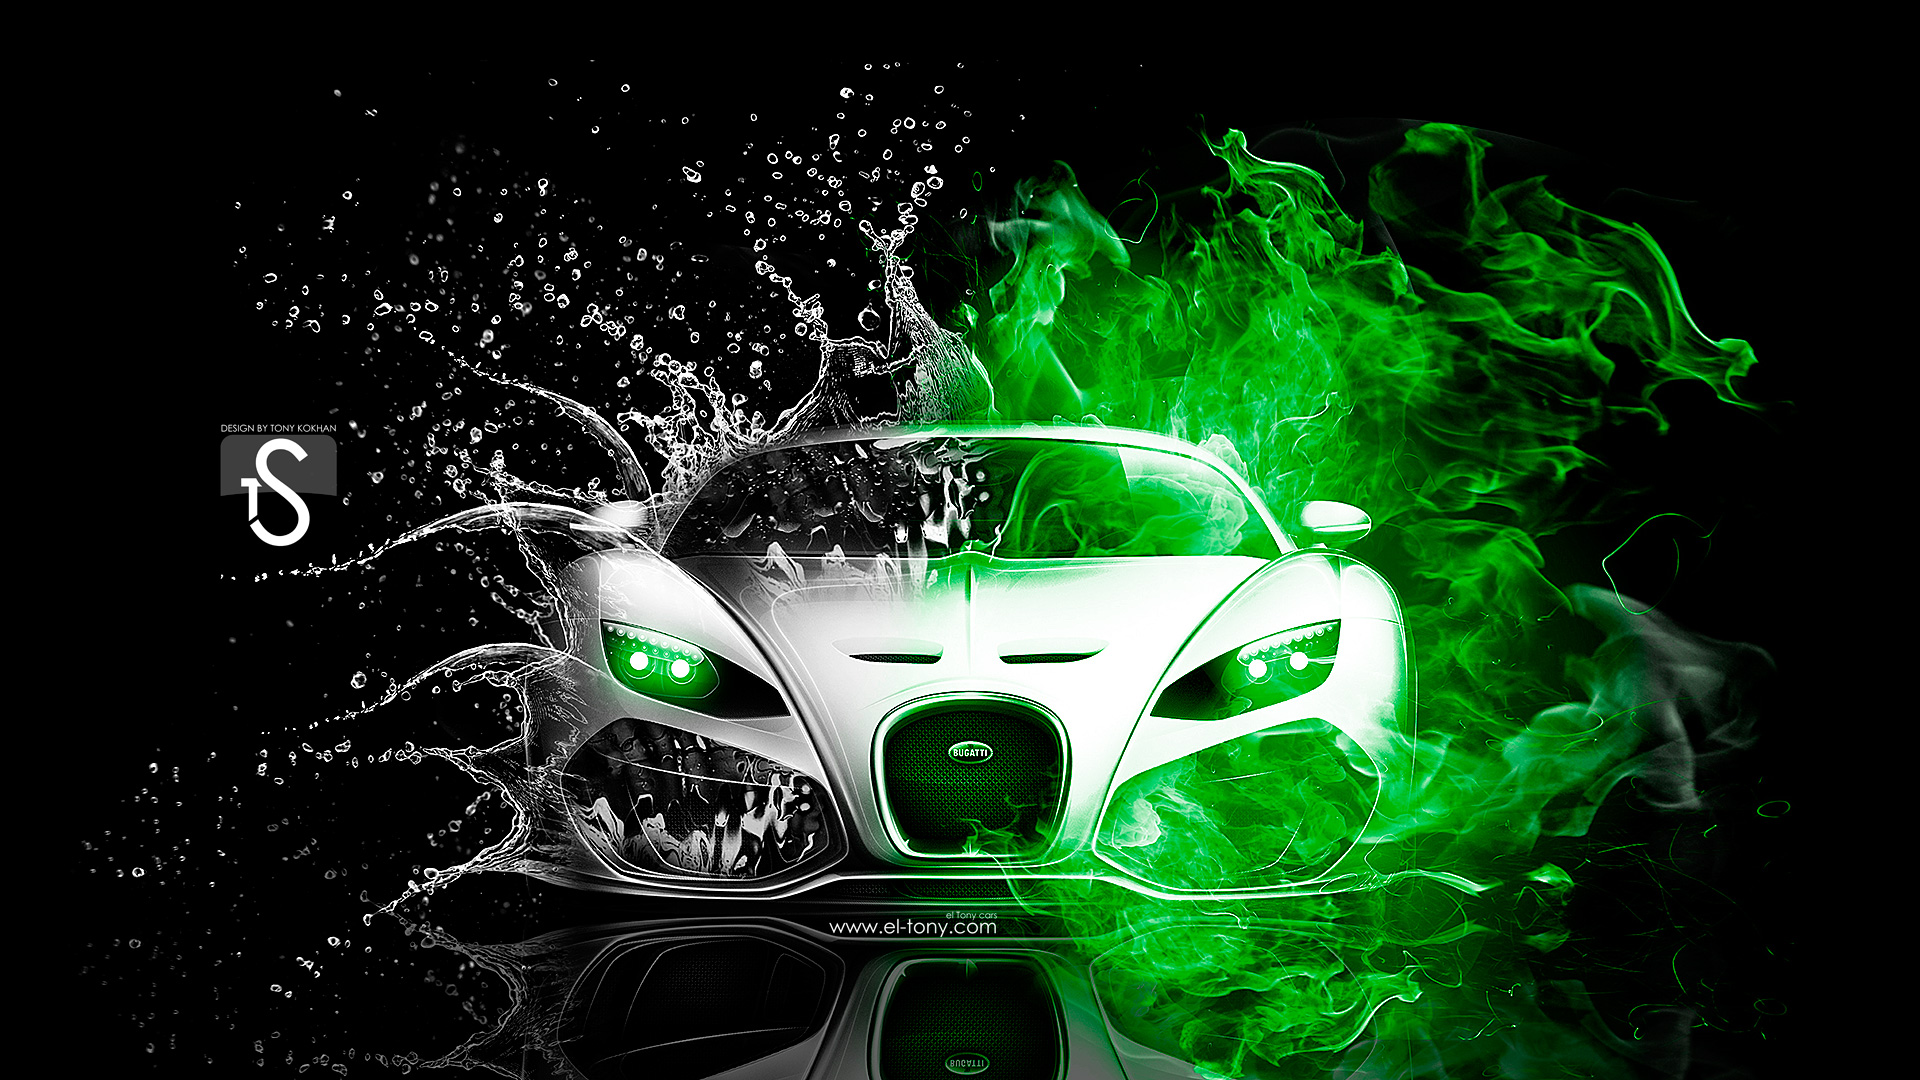 Bugatti Green Fire Water Abstract Mix HD Wallpaper Design By